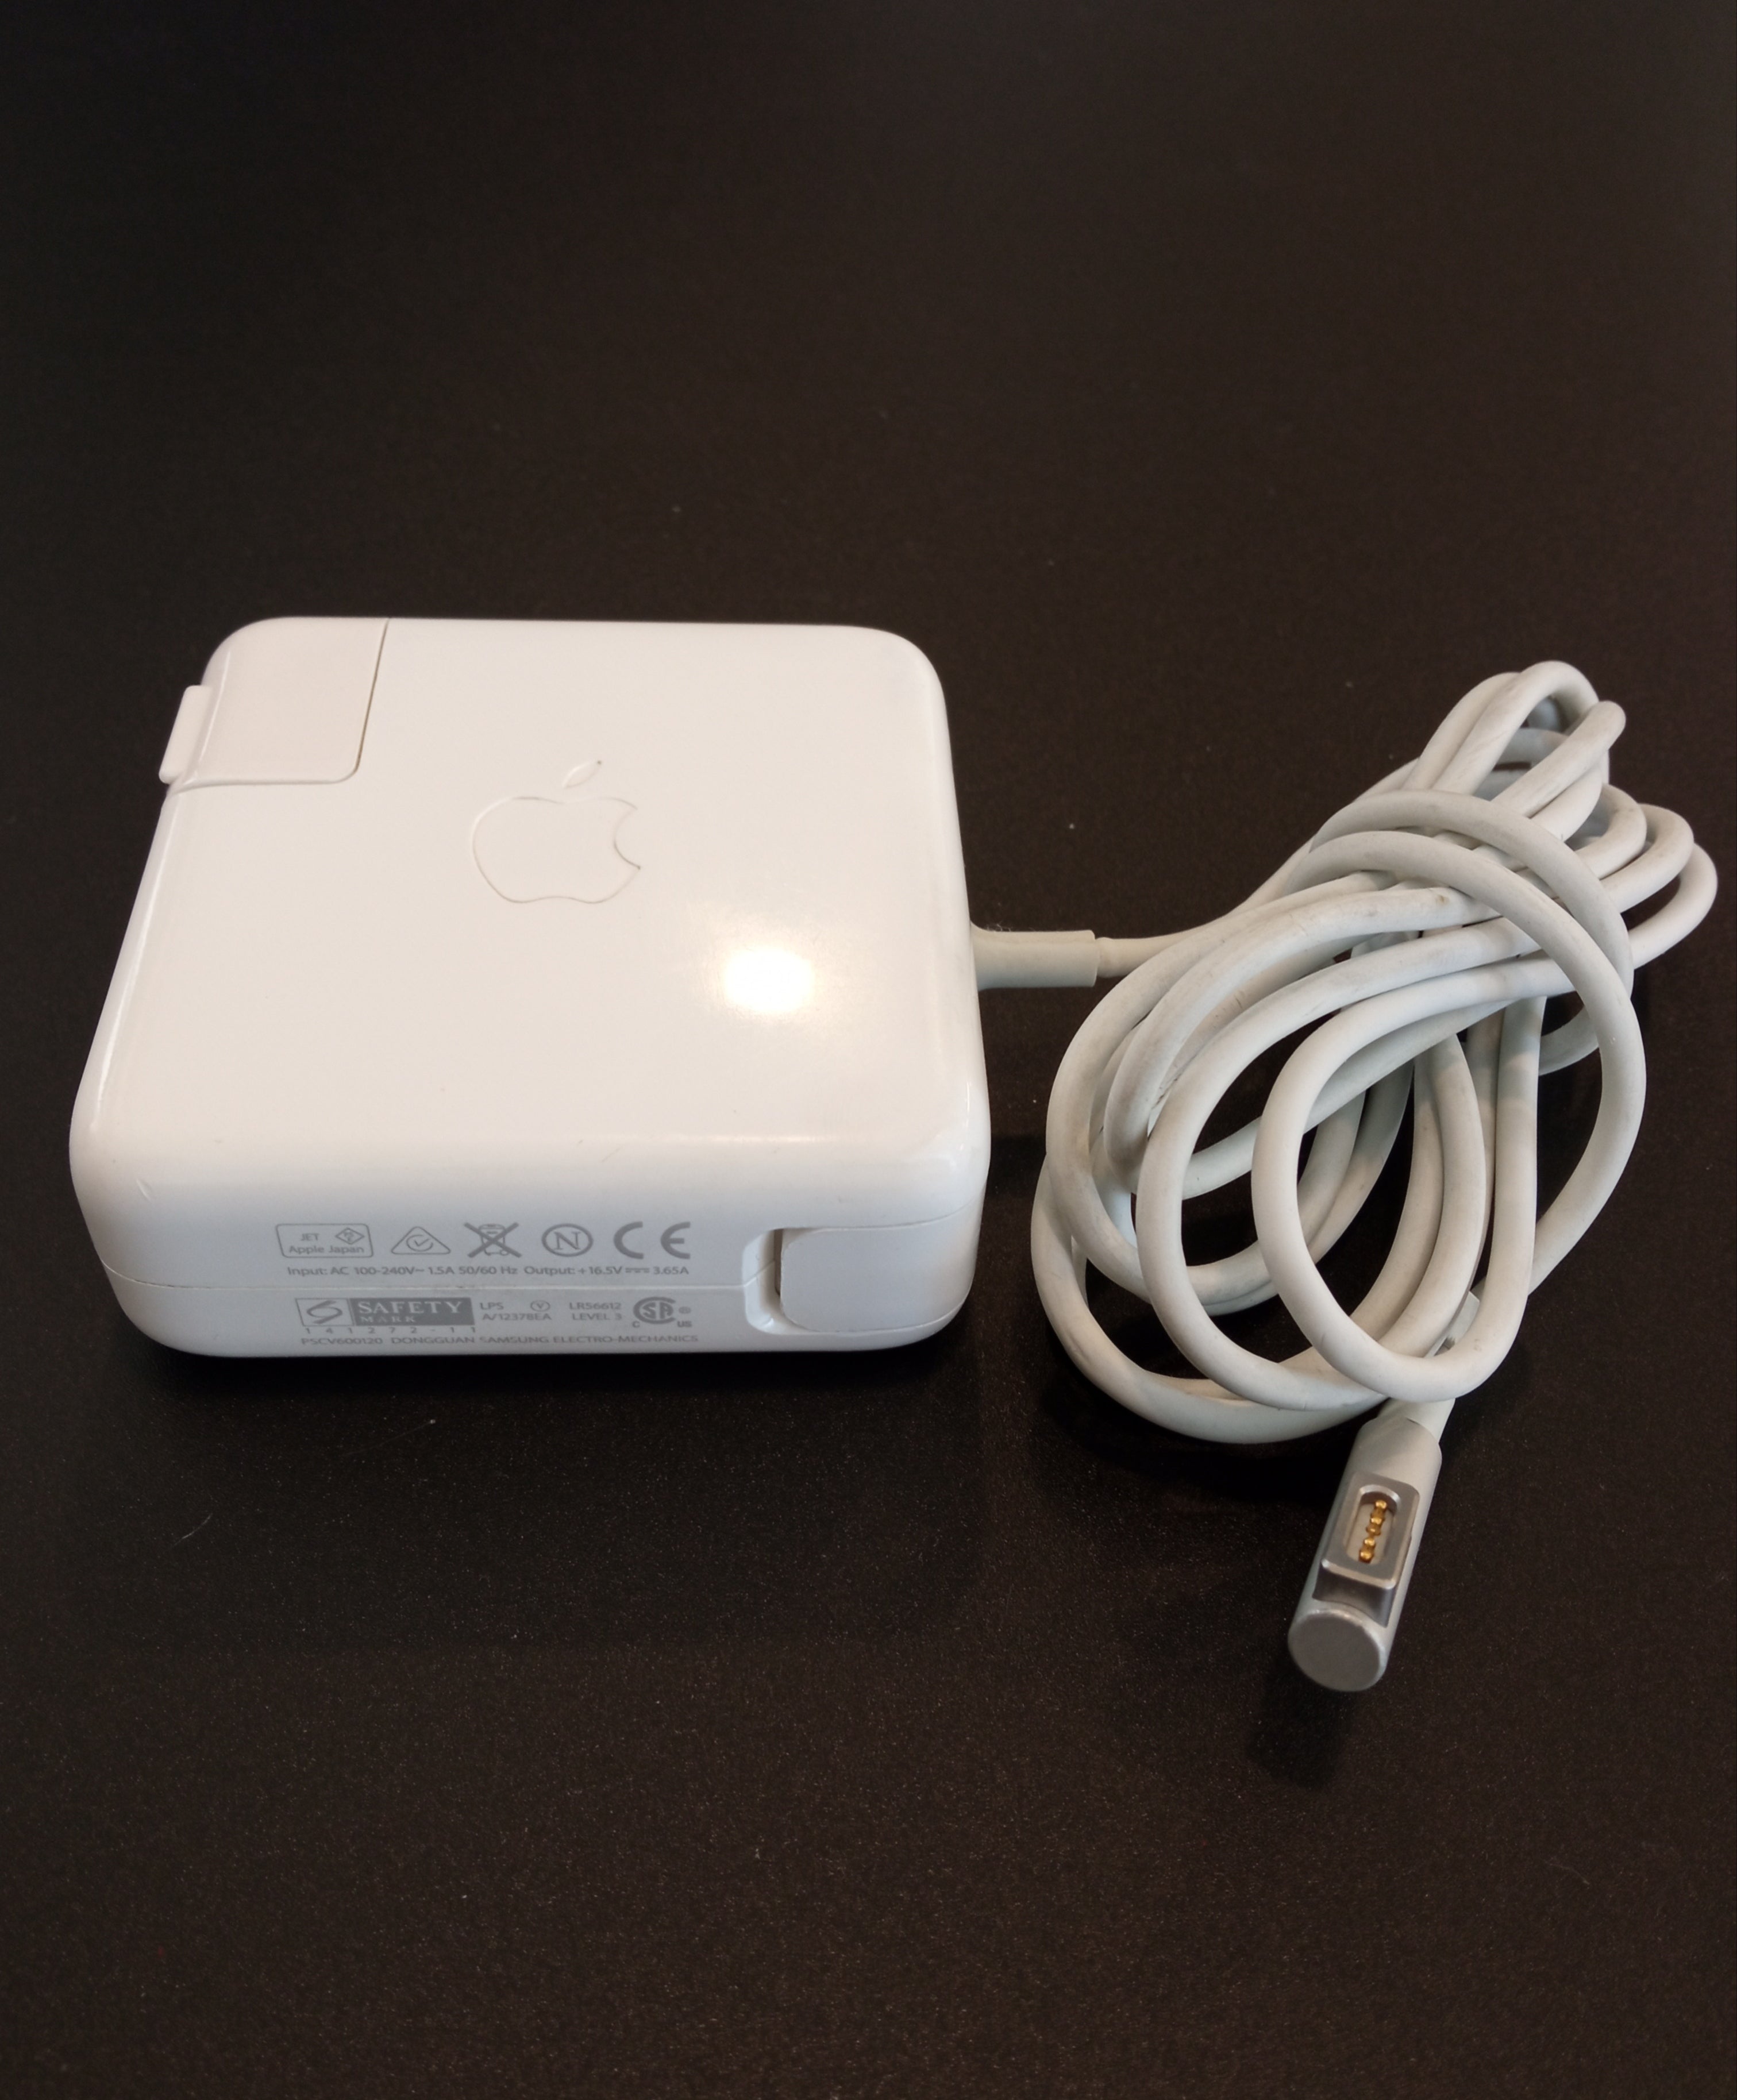 Apple MagSafe 60W Power Adapter (MC461LL/A) A1344 Genuine (Grade B Refurbished) - One Year Warranty